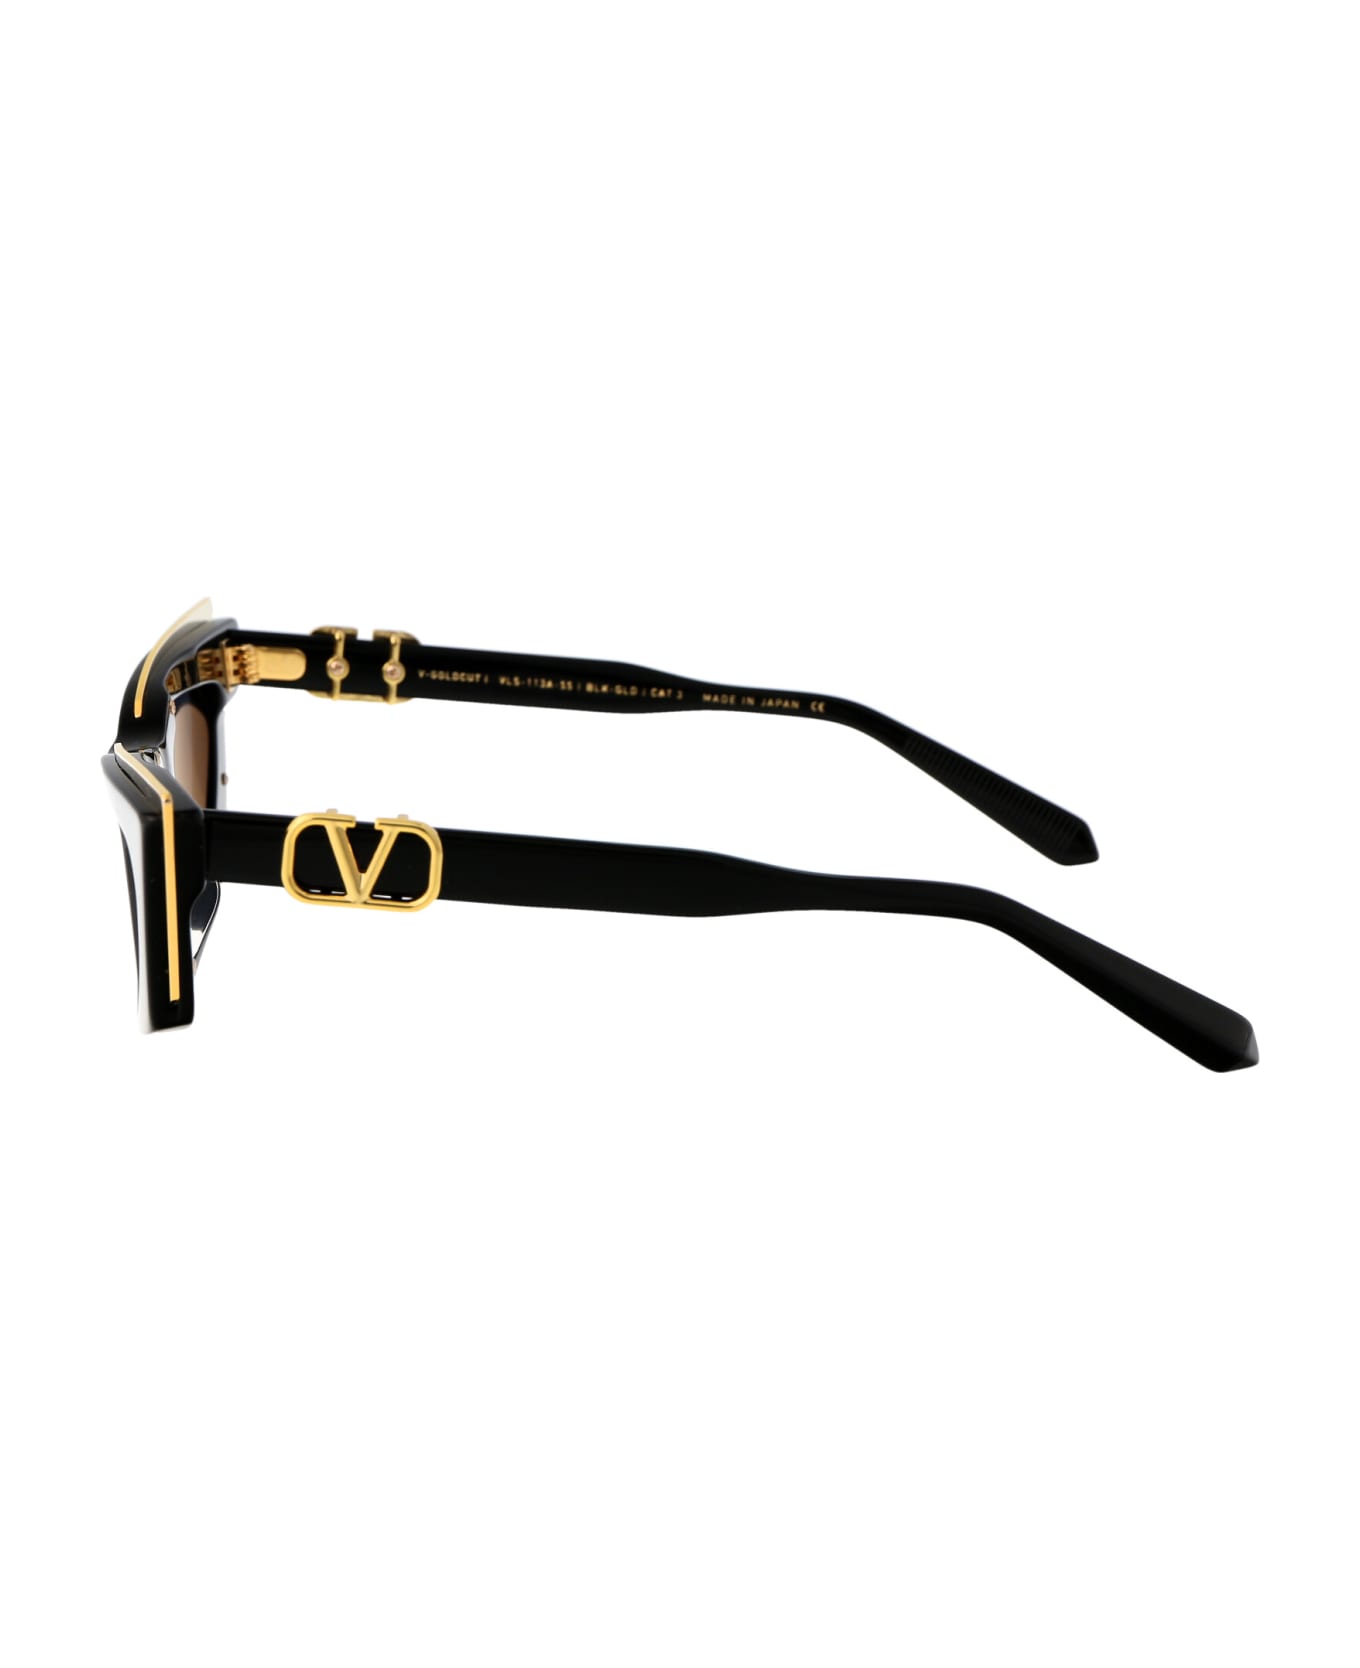 Valentino Eyewear V - Goldcut - I Sunglasses - 113sunglasses SNR 213